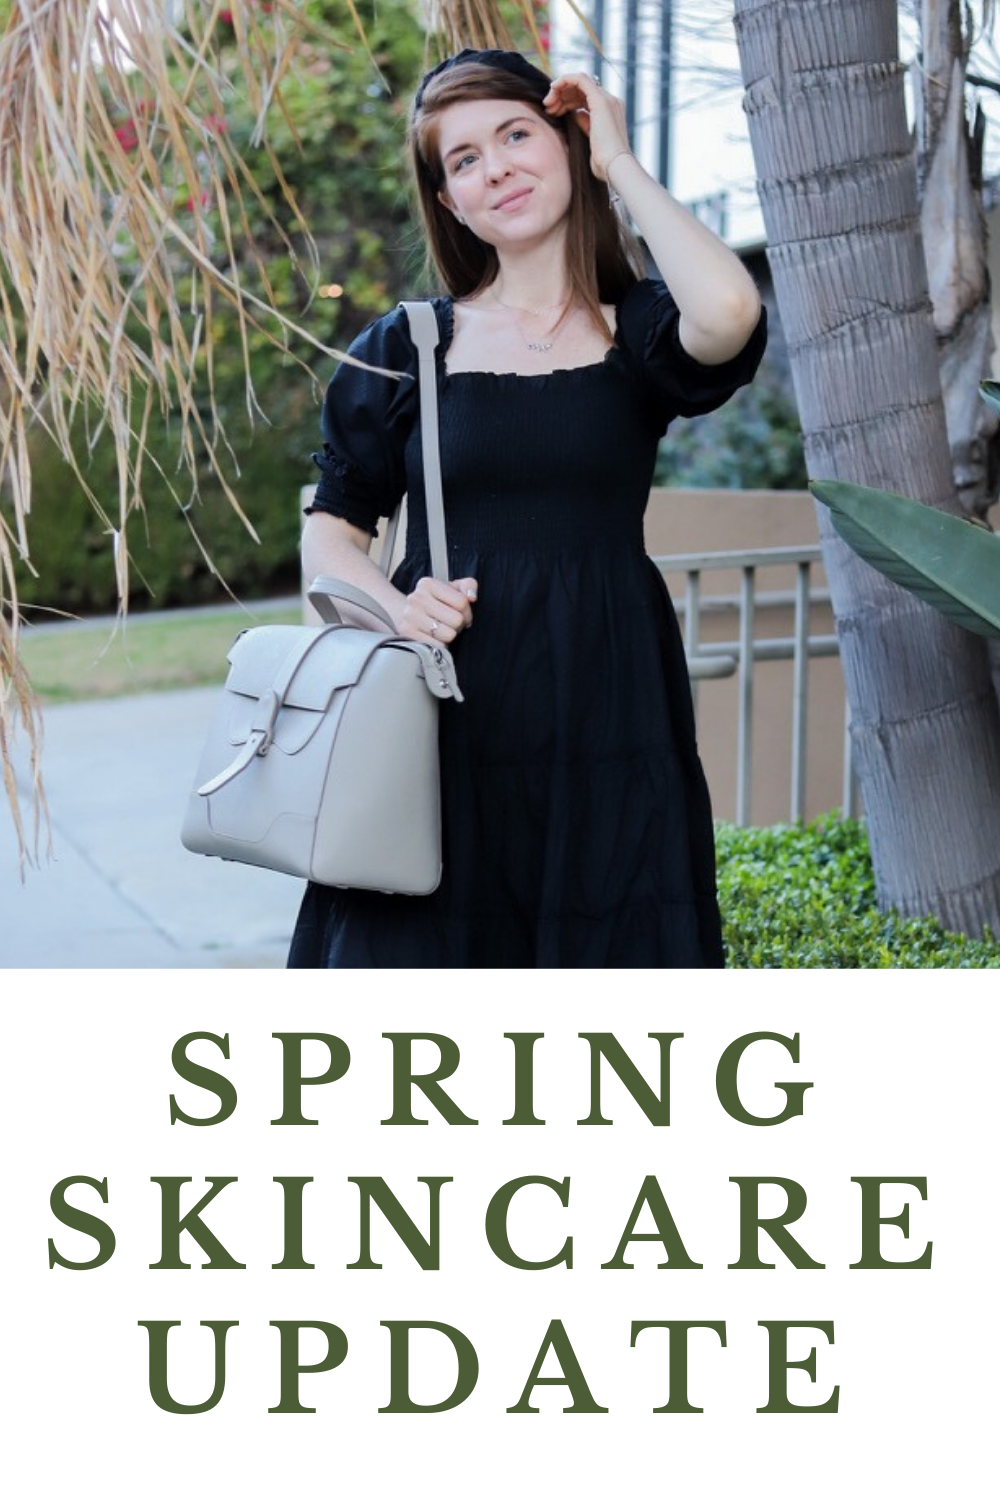 spring skincare update, lments of style, hill house nesli dress, la blogger, one love organics, primally pure, senreve maestra bag discount code, puffed braided headband, juice beauty